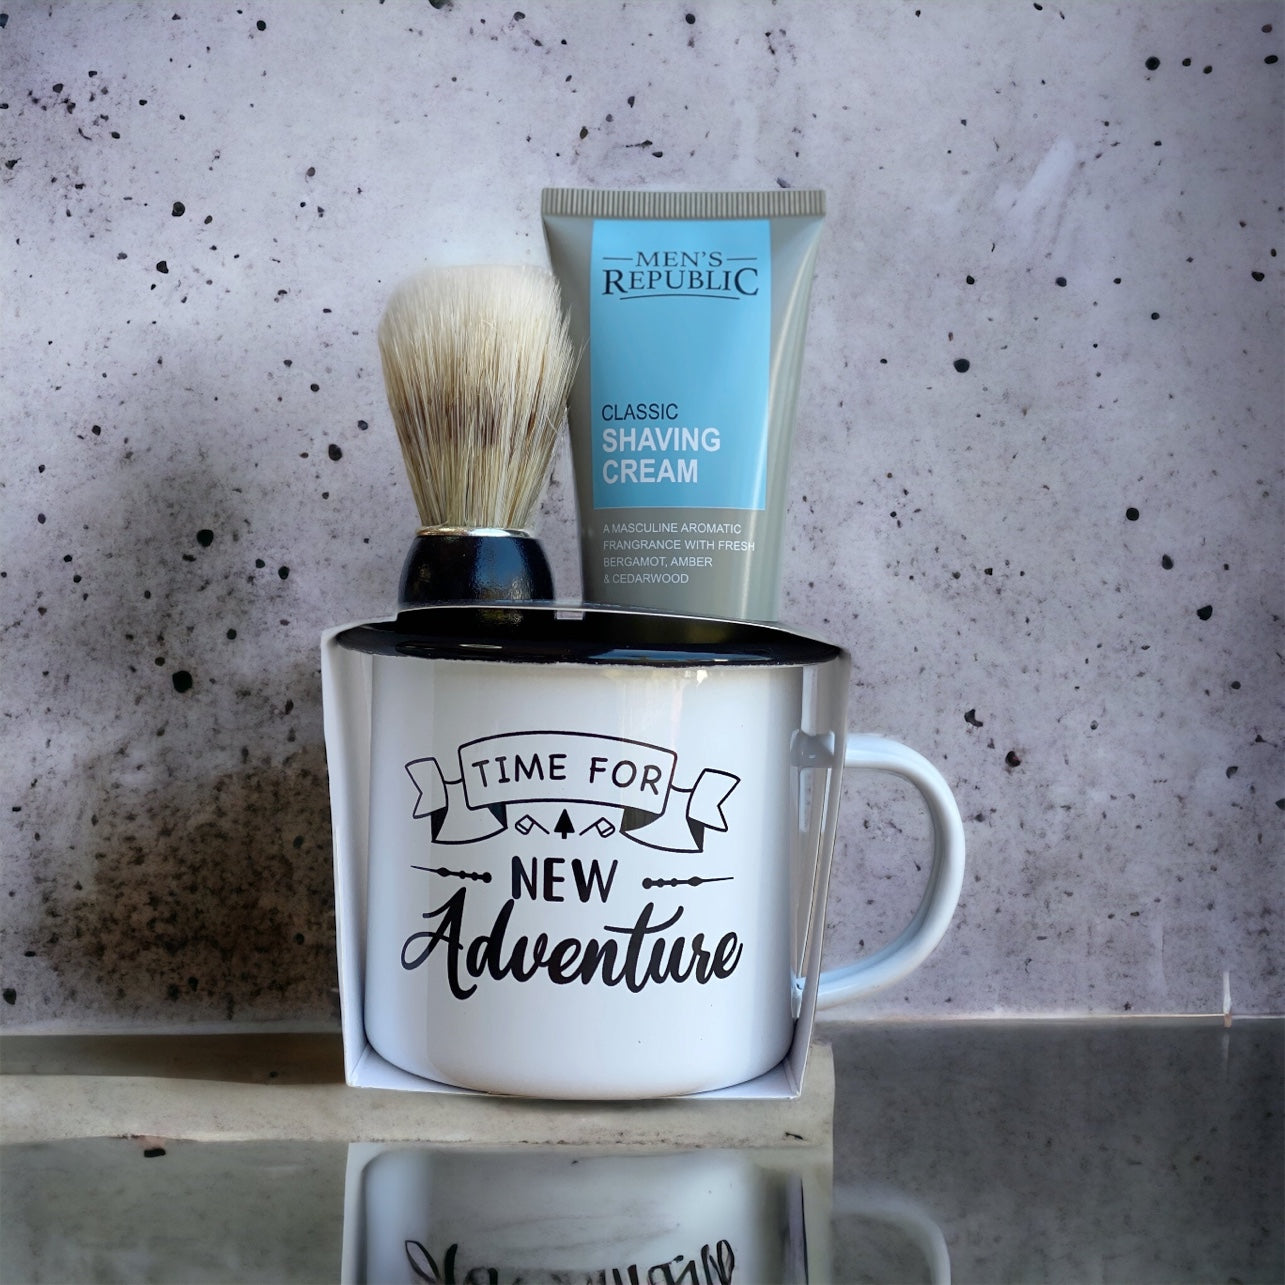 Men’s Republic Mug with Shaving Cream and Beard Brush